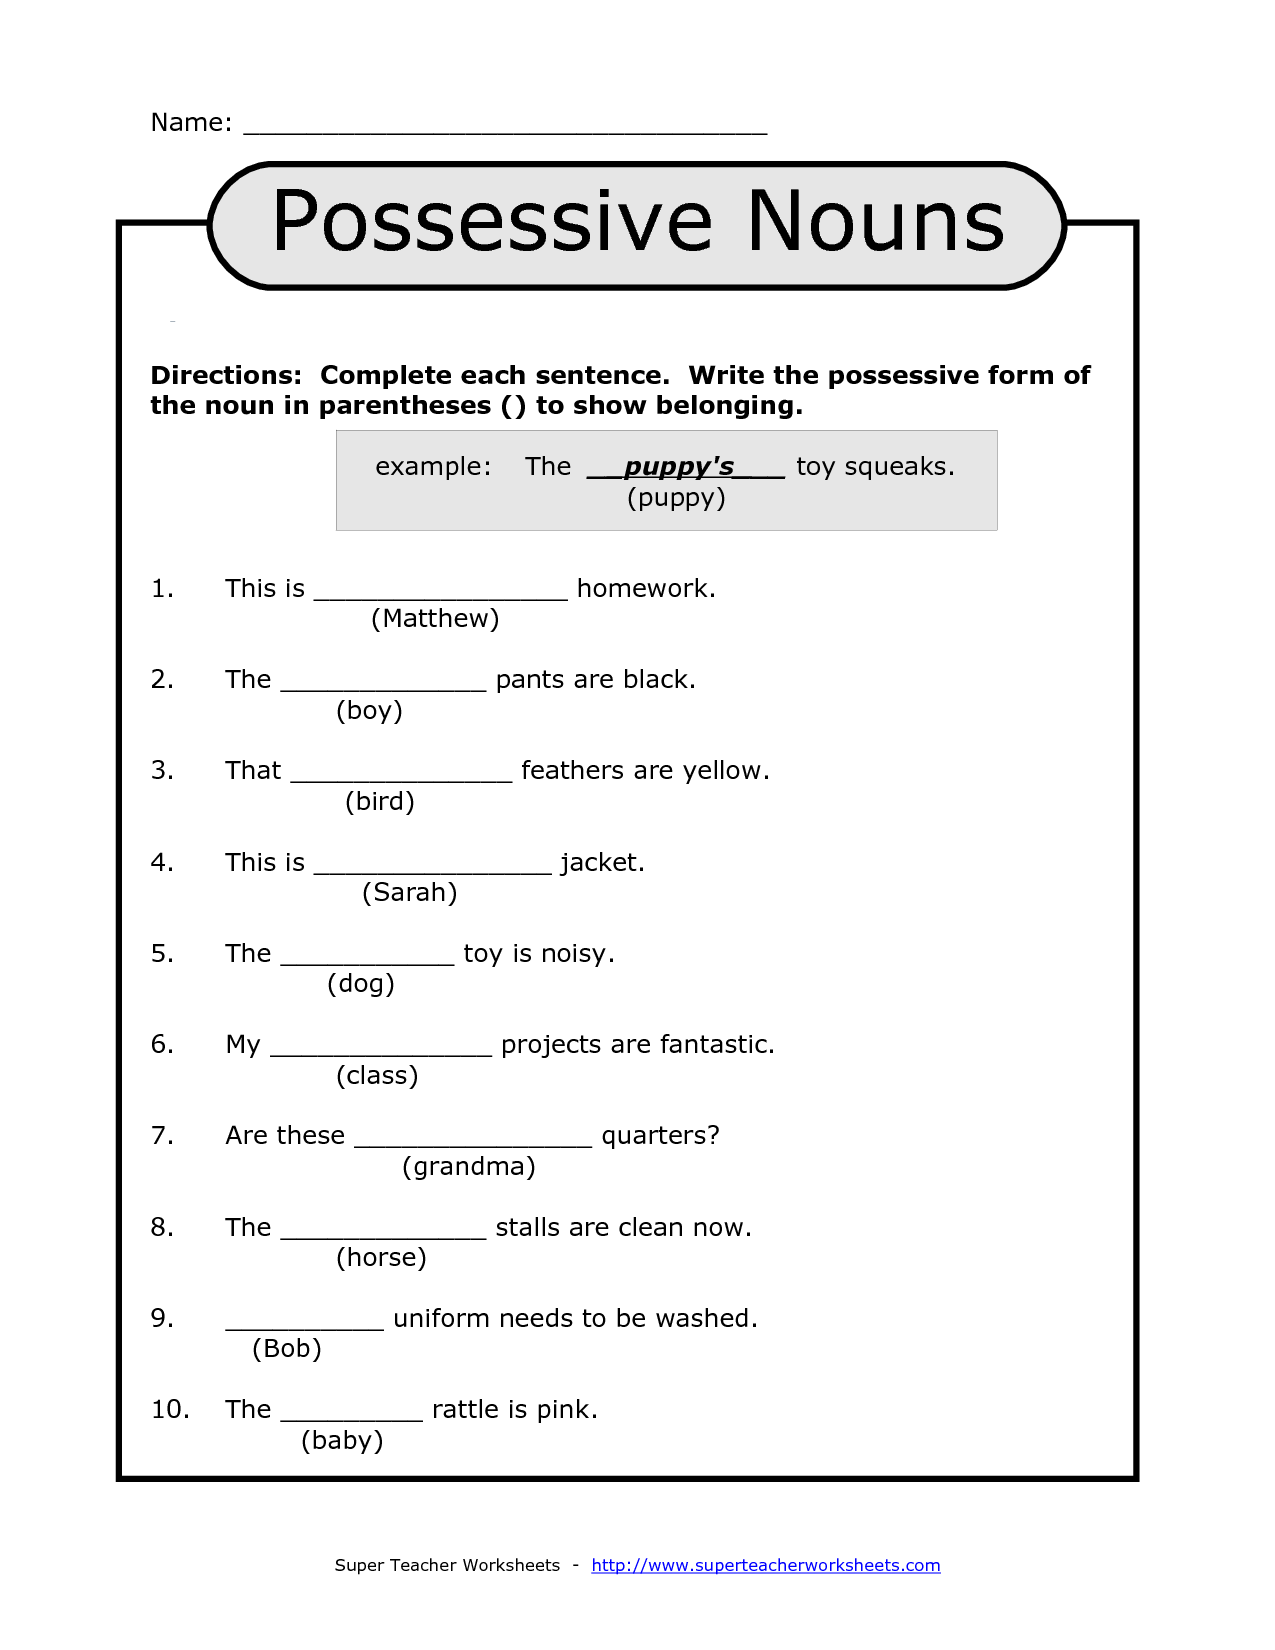 15-best-images-of-free-possessive-nouns-printable-worksheets-plural-possessive-nouns